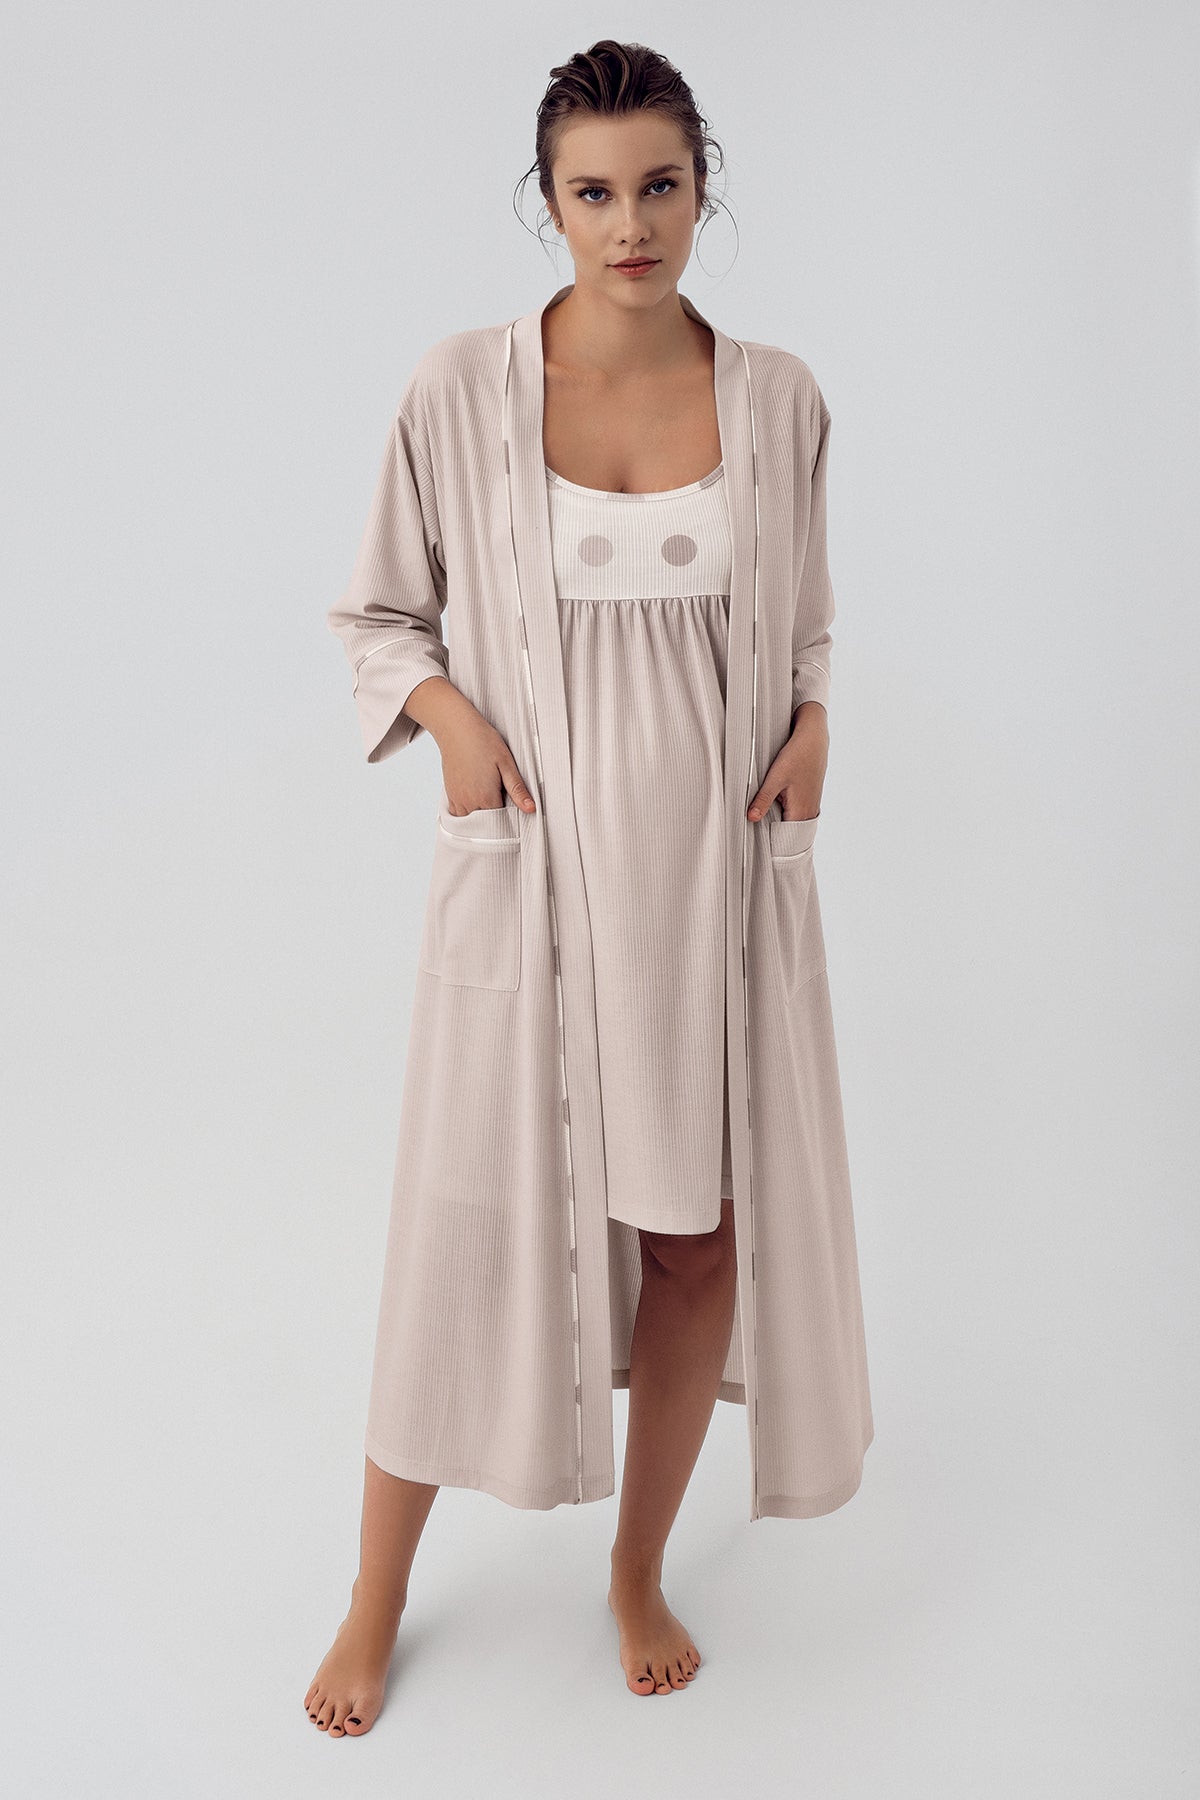 Shopymommy 16401 Polka Dot Maternity & Nursing Nightgown With Robe Beige